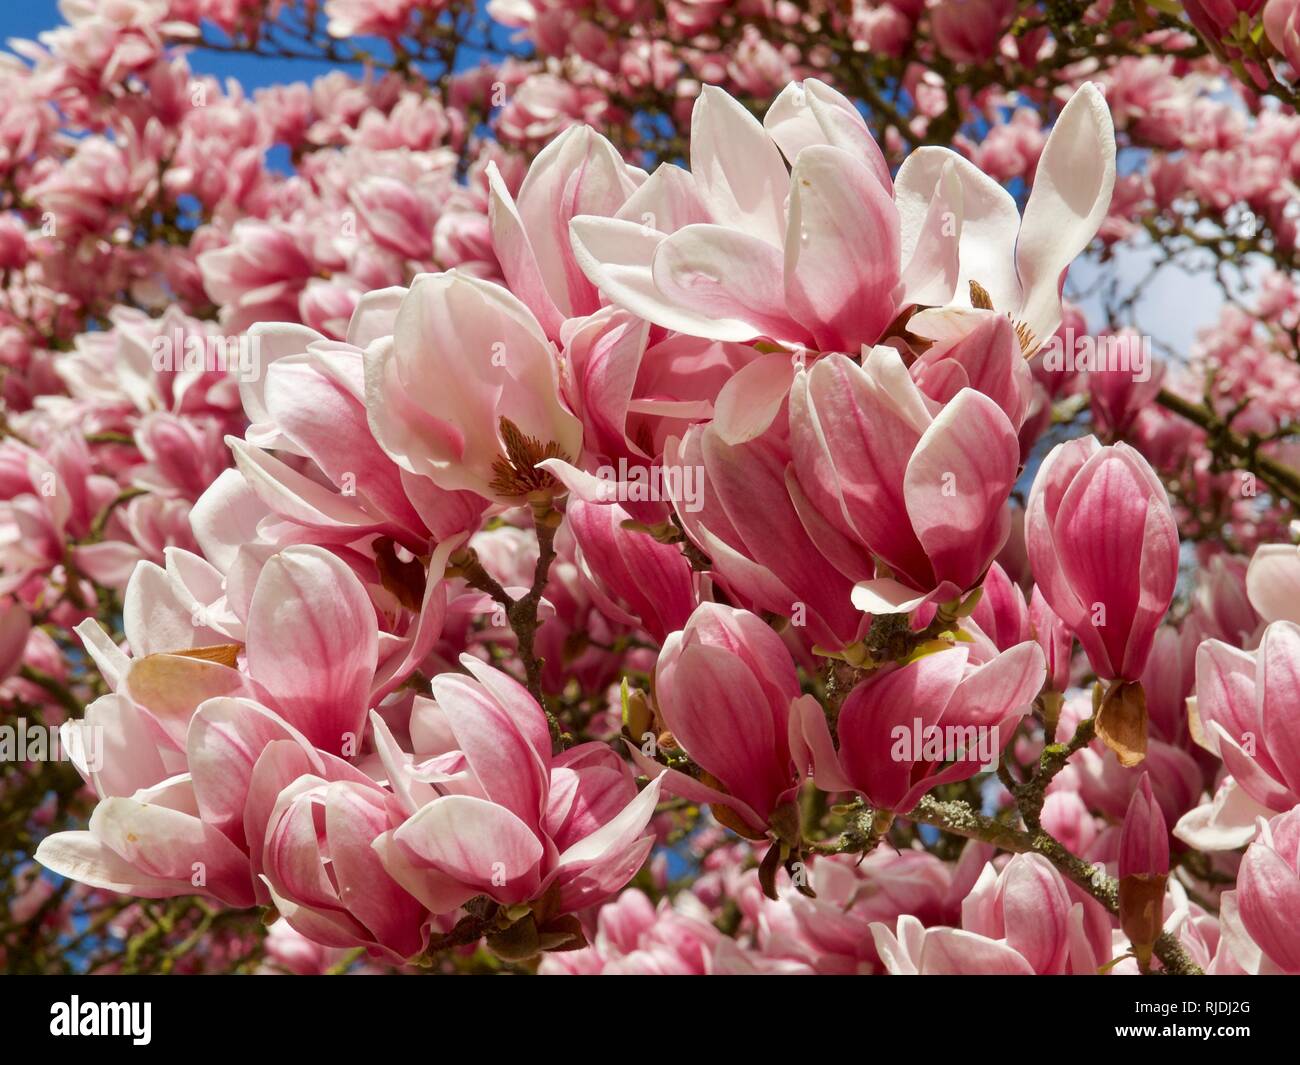 Big magnolia tree blooming full of pink magnolia blossoms Stock Photo